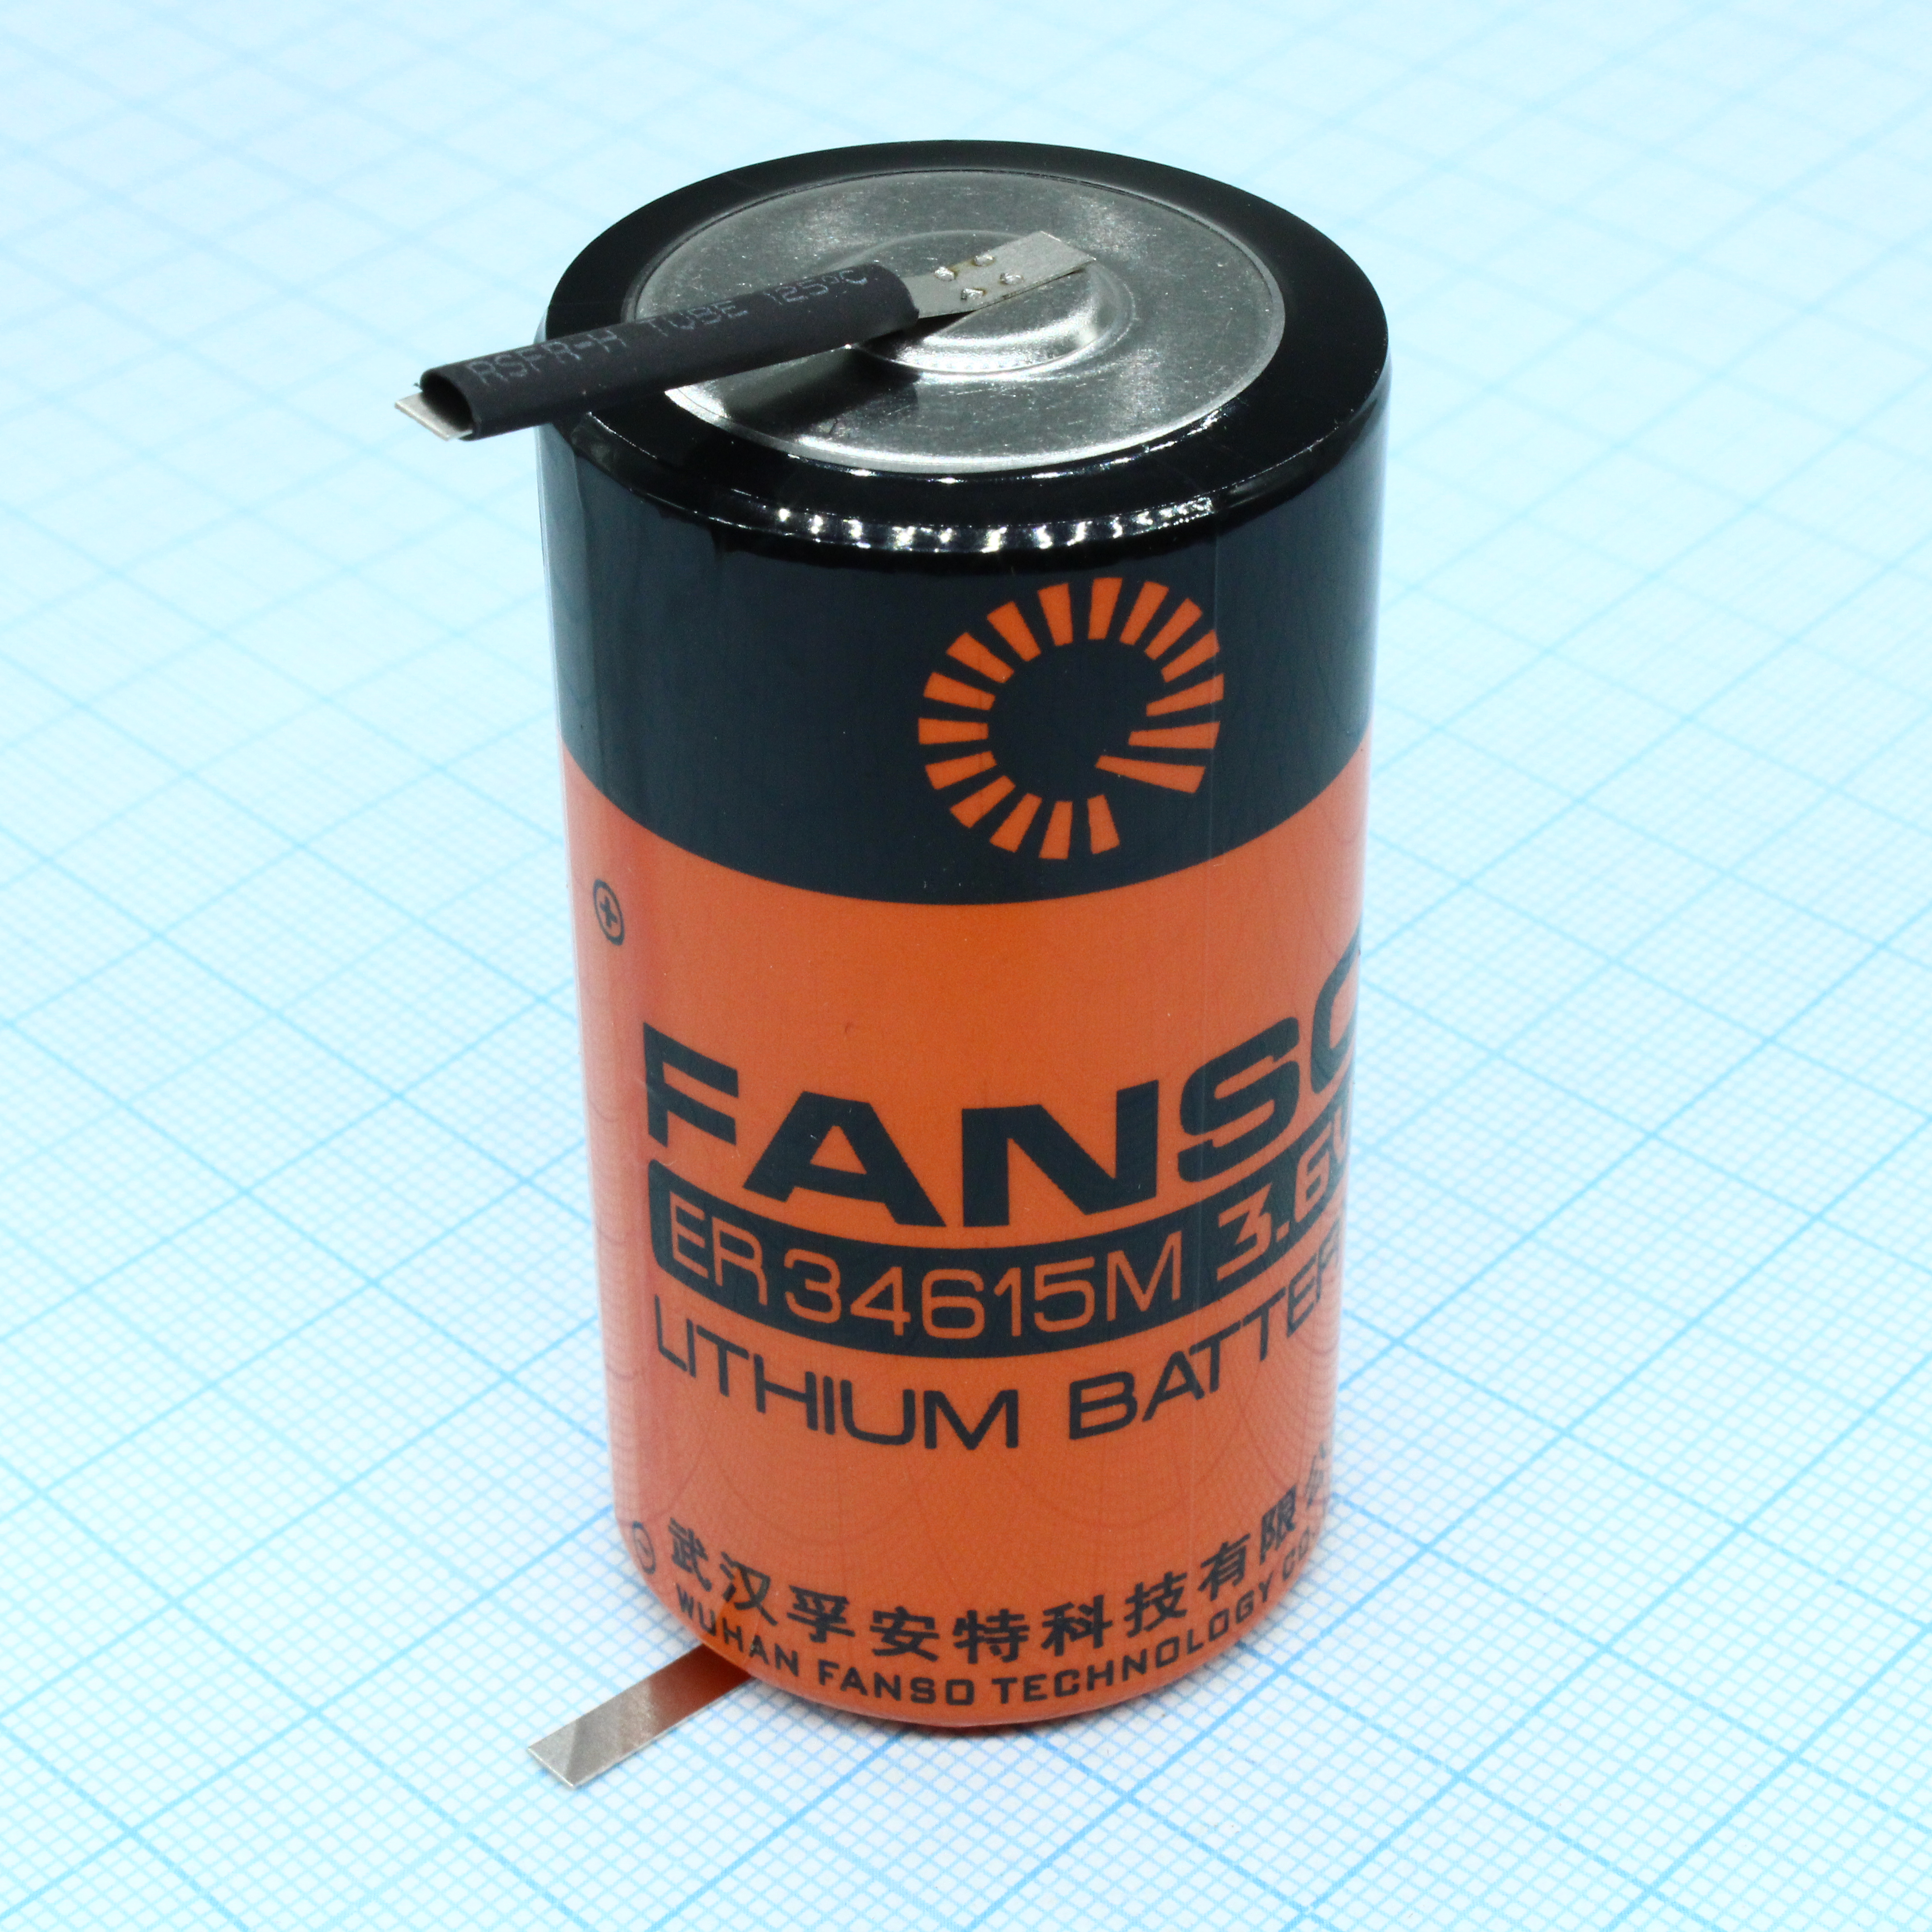 Батарейки ER34615M/T Fanso